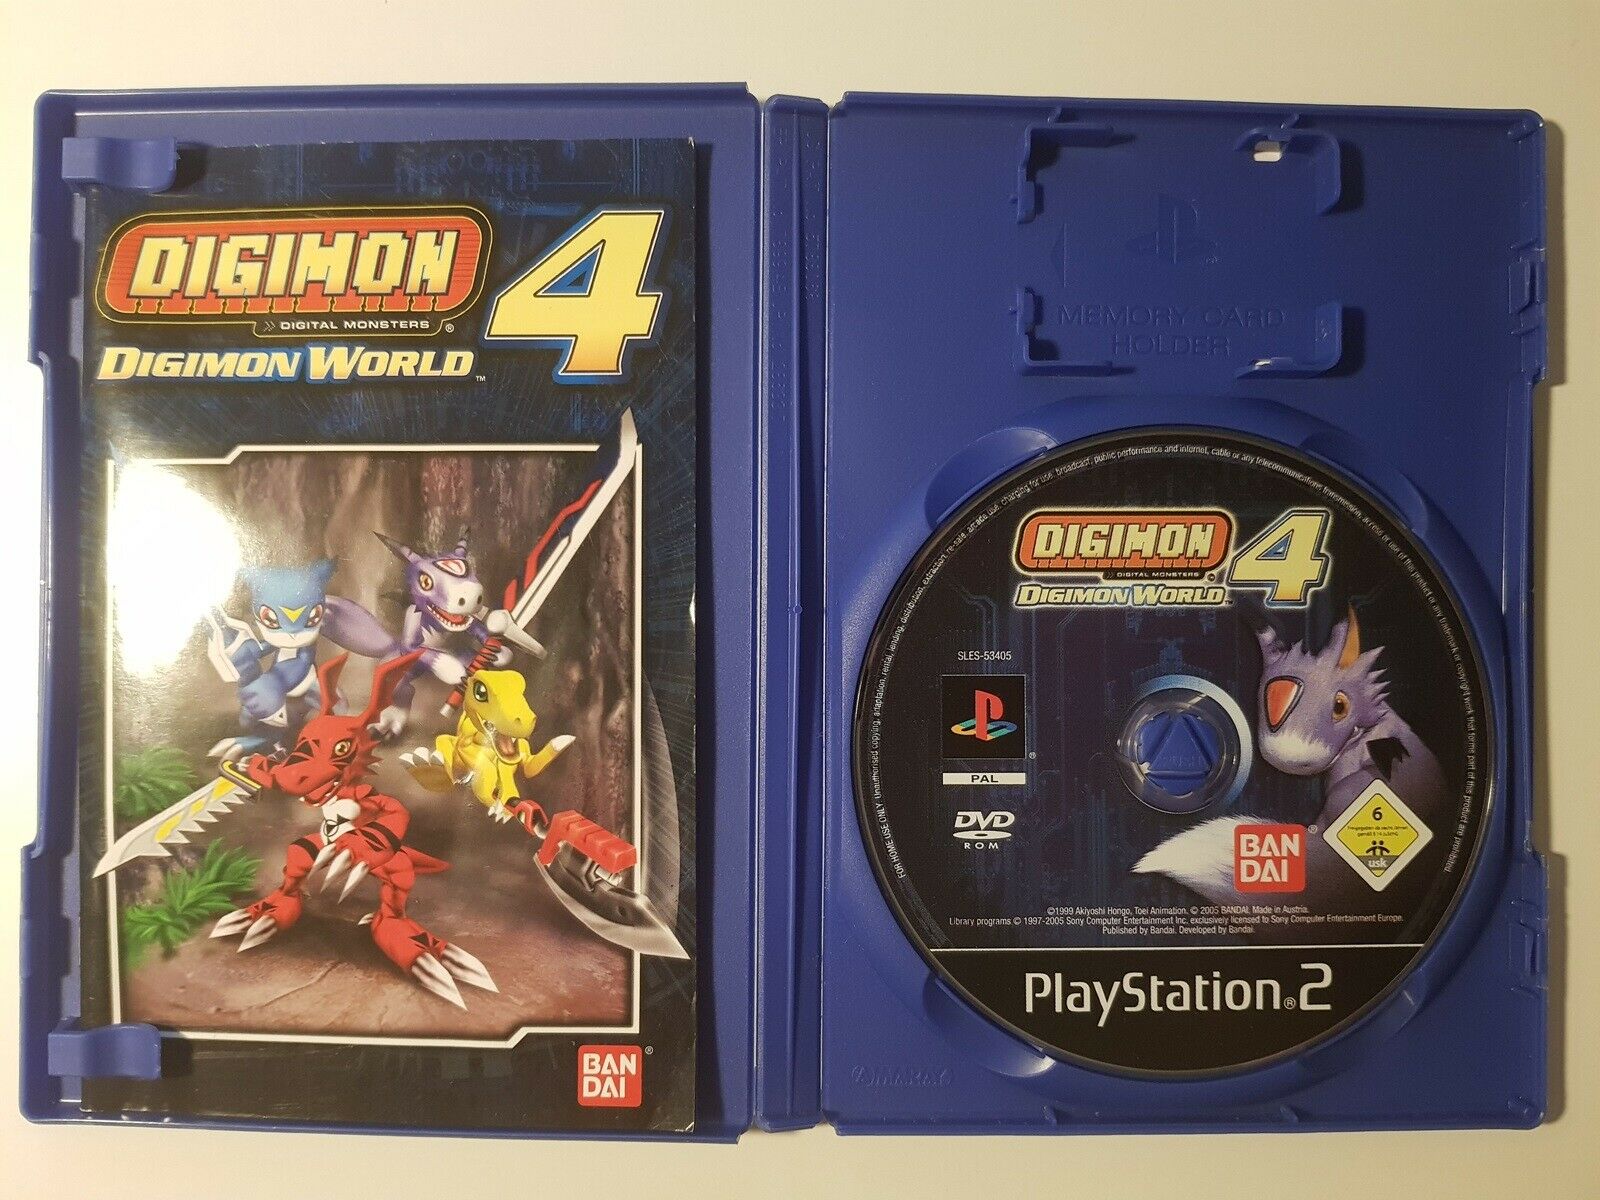 Digimon World 4, PS2